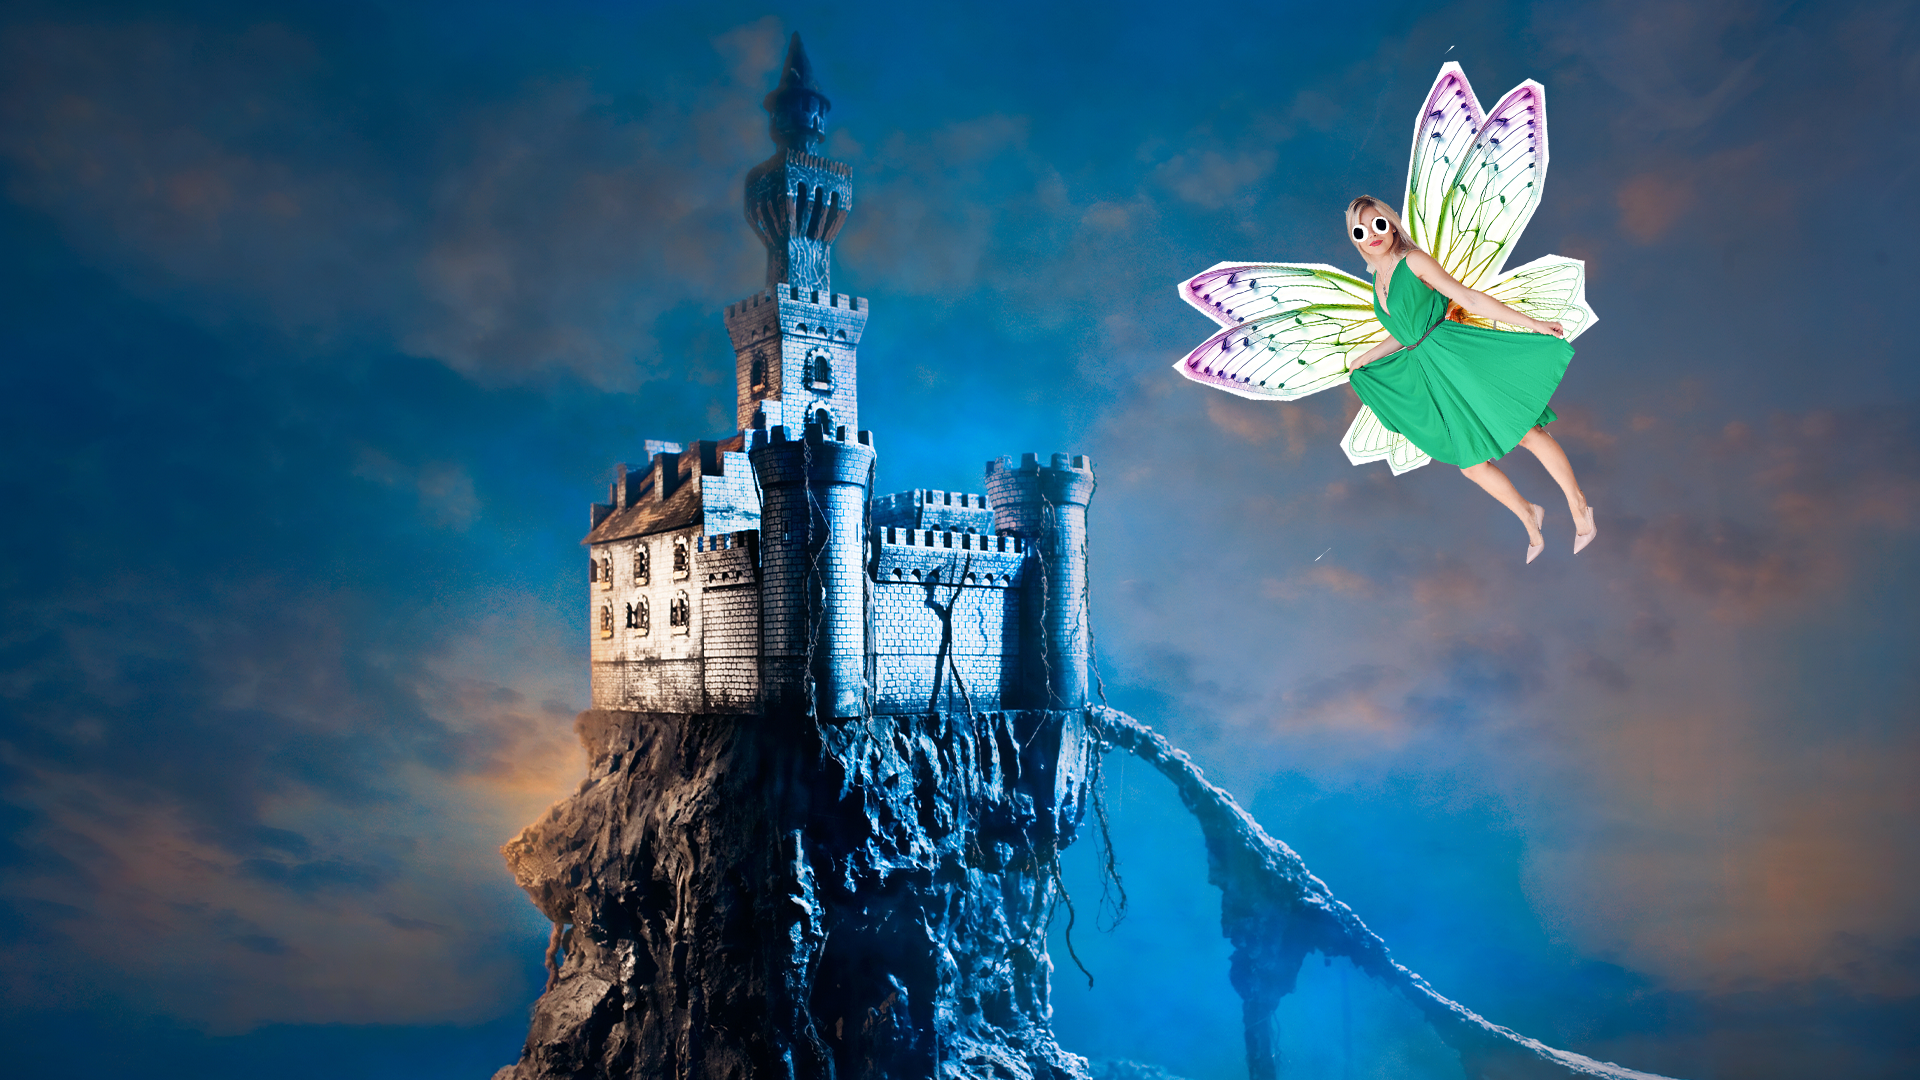 A fairy outside a spooky castle